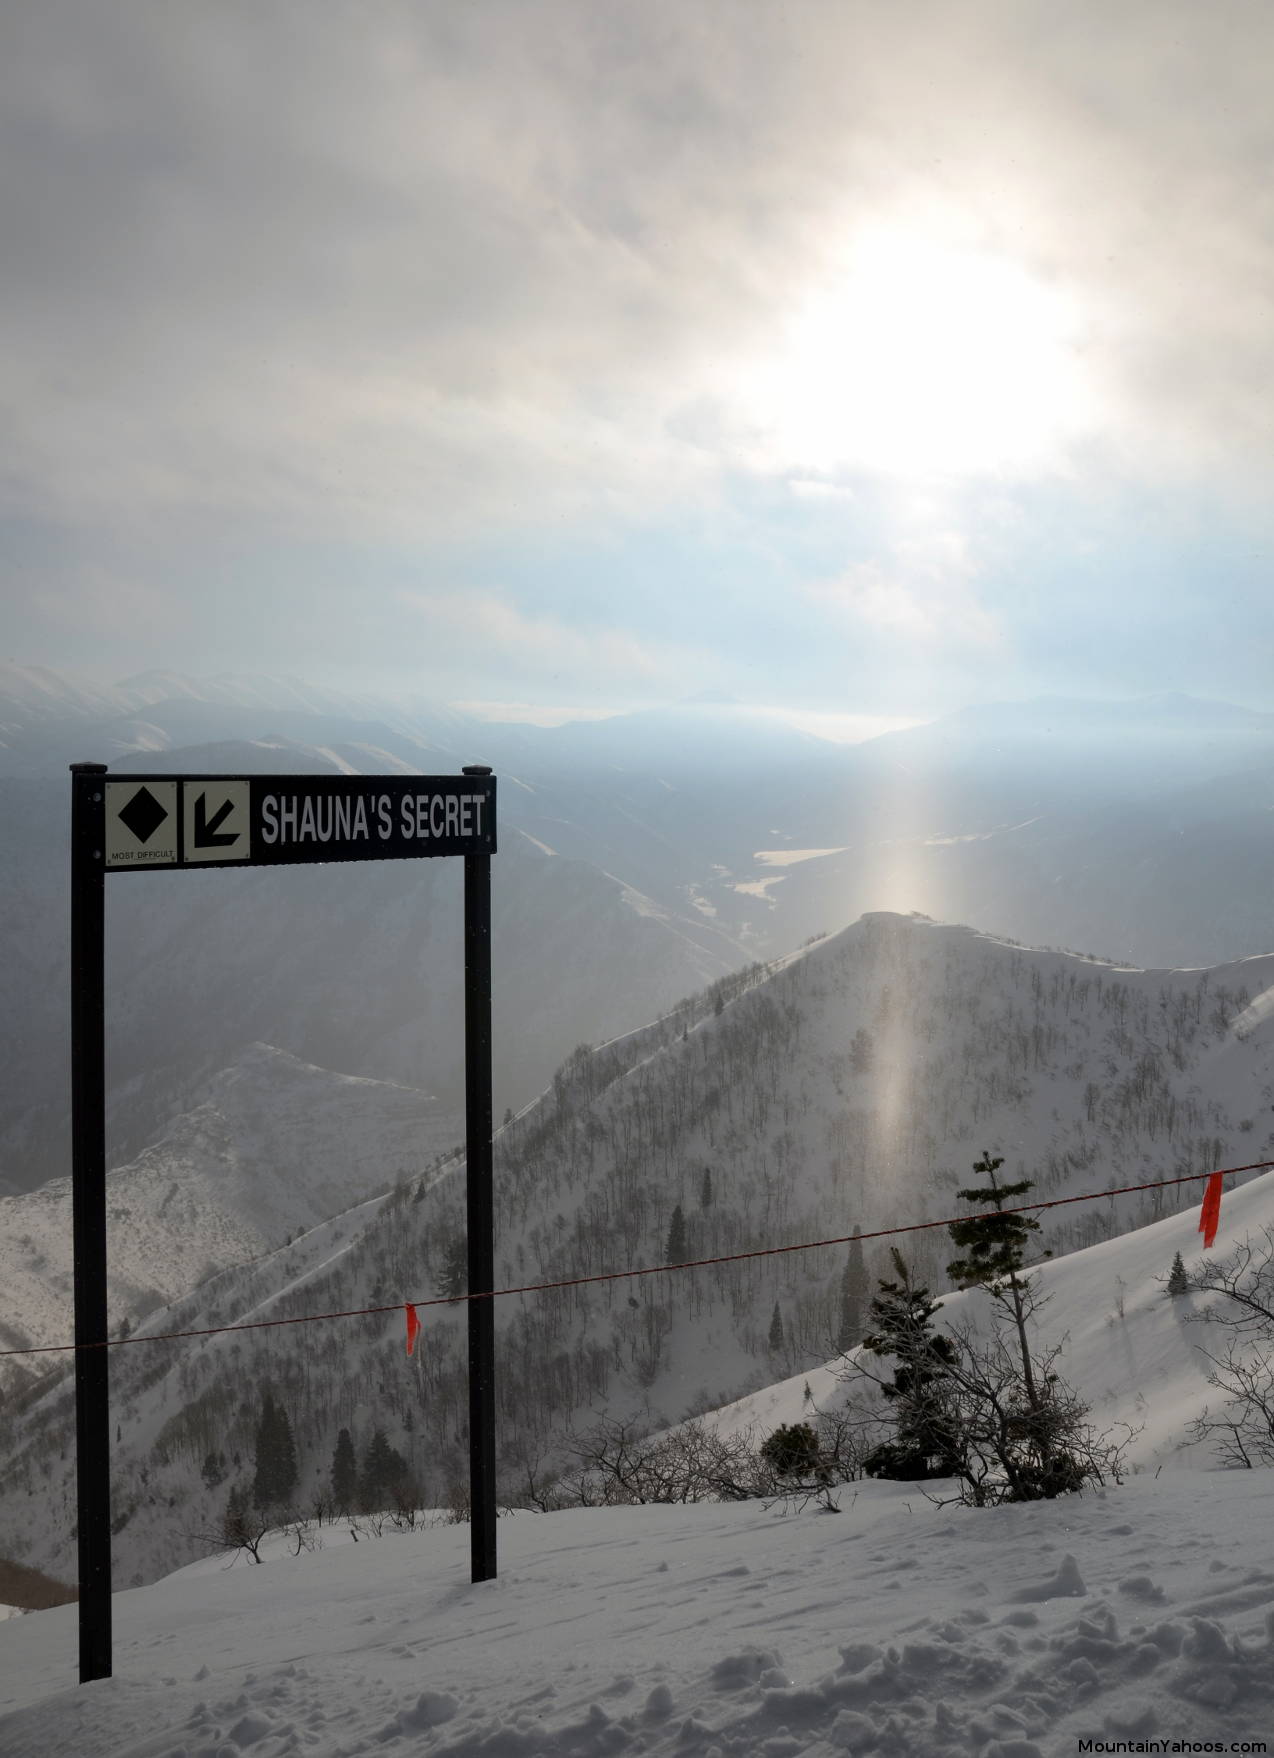 Far East - Shaunas Secret, black diamond ski run